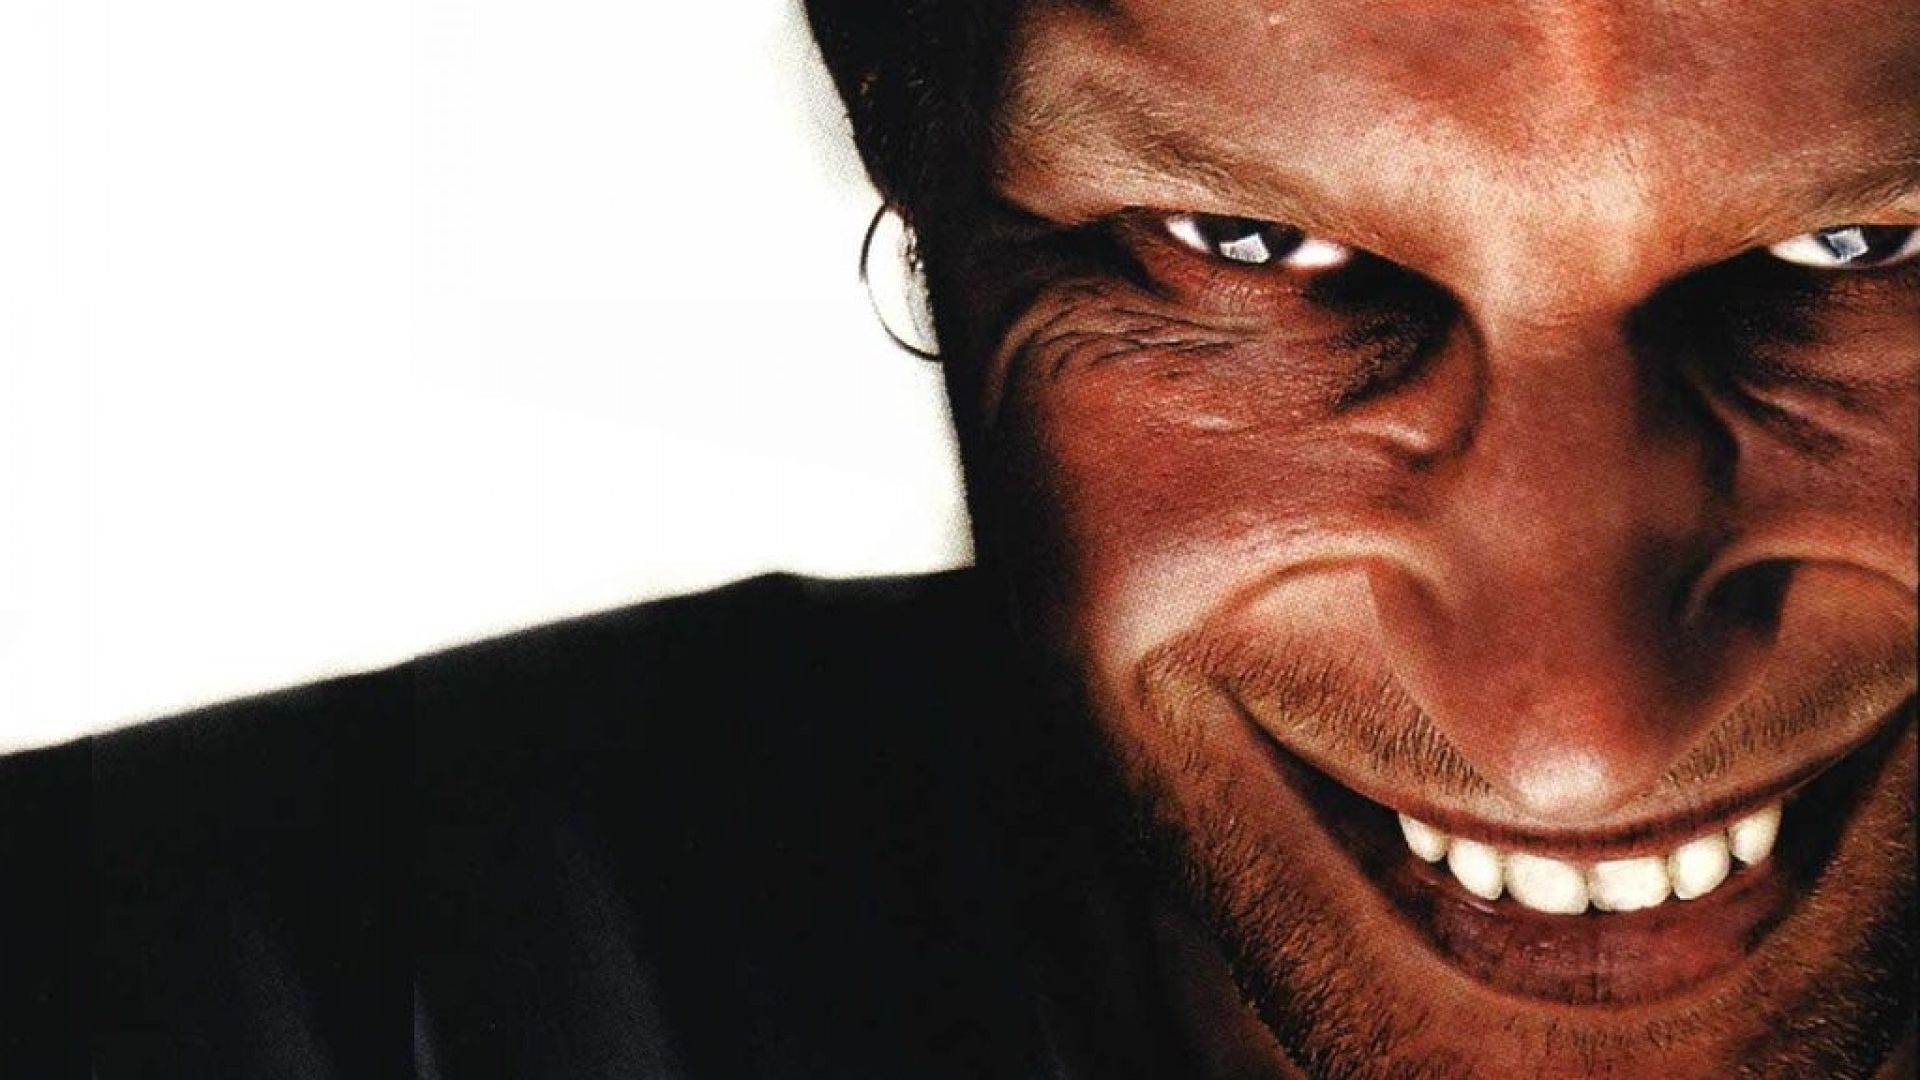 Wallpaper Musician Aphex Twin face